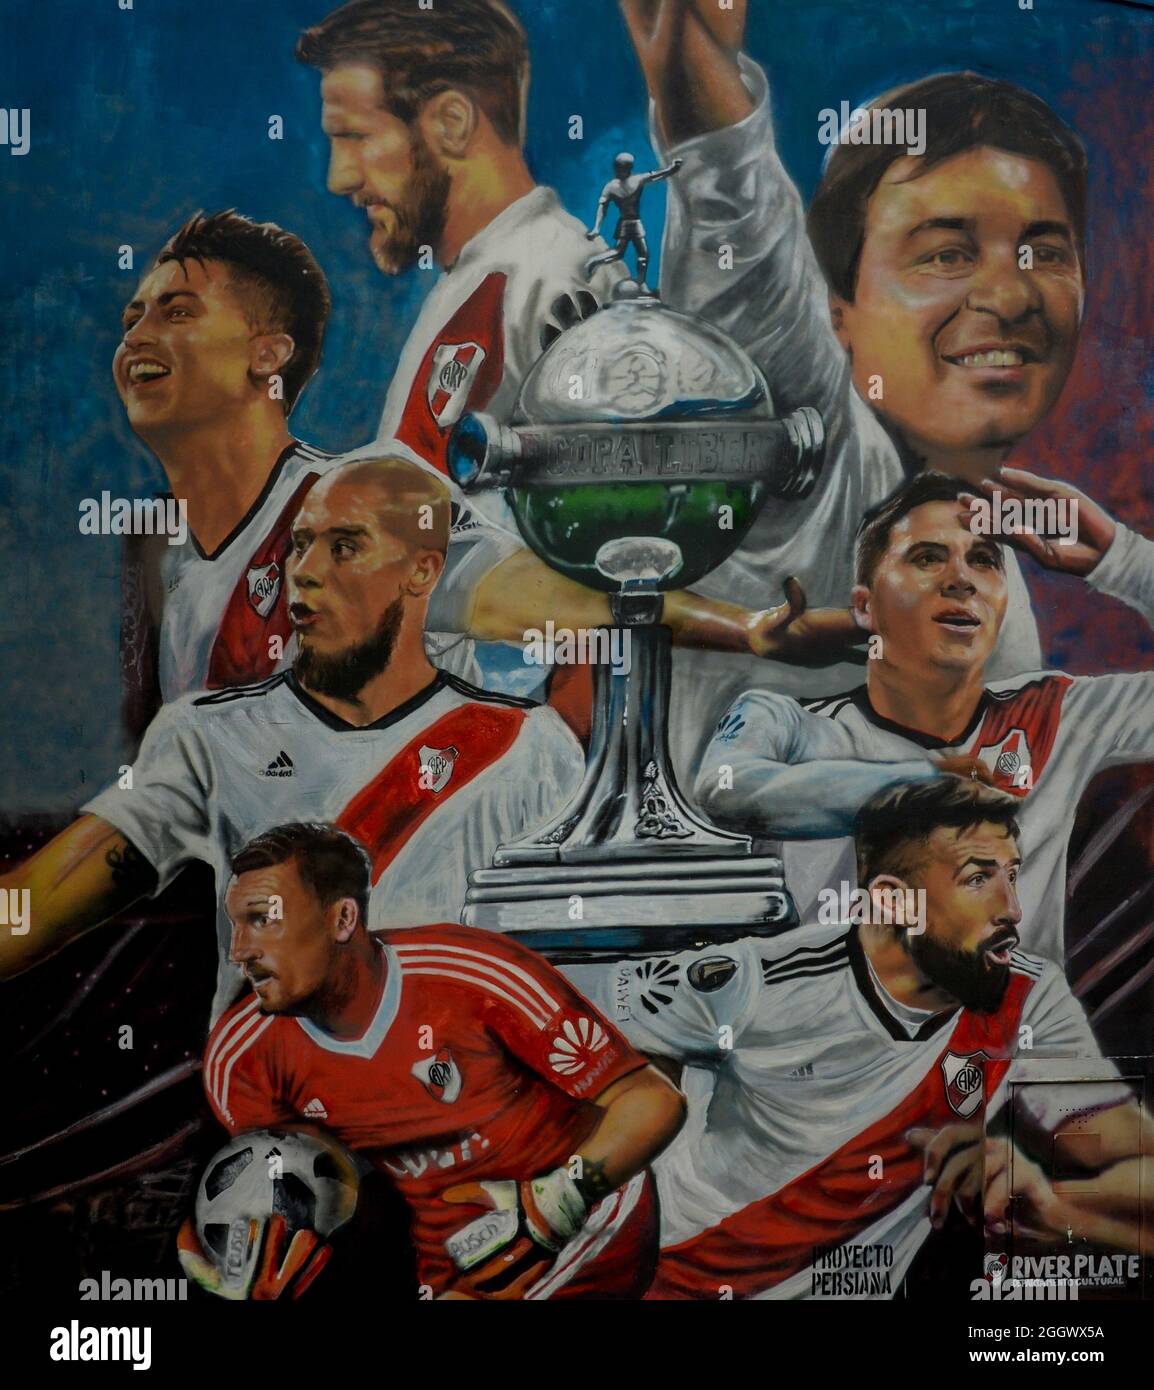 street art depicting socker players of Club Atletico River Plate, players are Marcelo Gallardo, Hector Martínez, Jonathan Maidana, Franco Armani, Juan Stock Photo